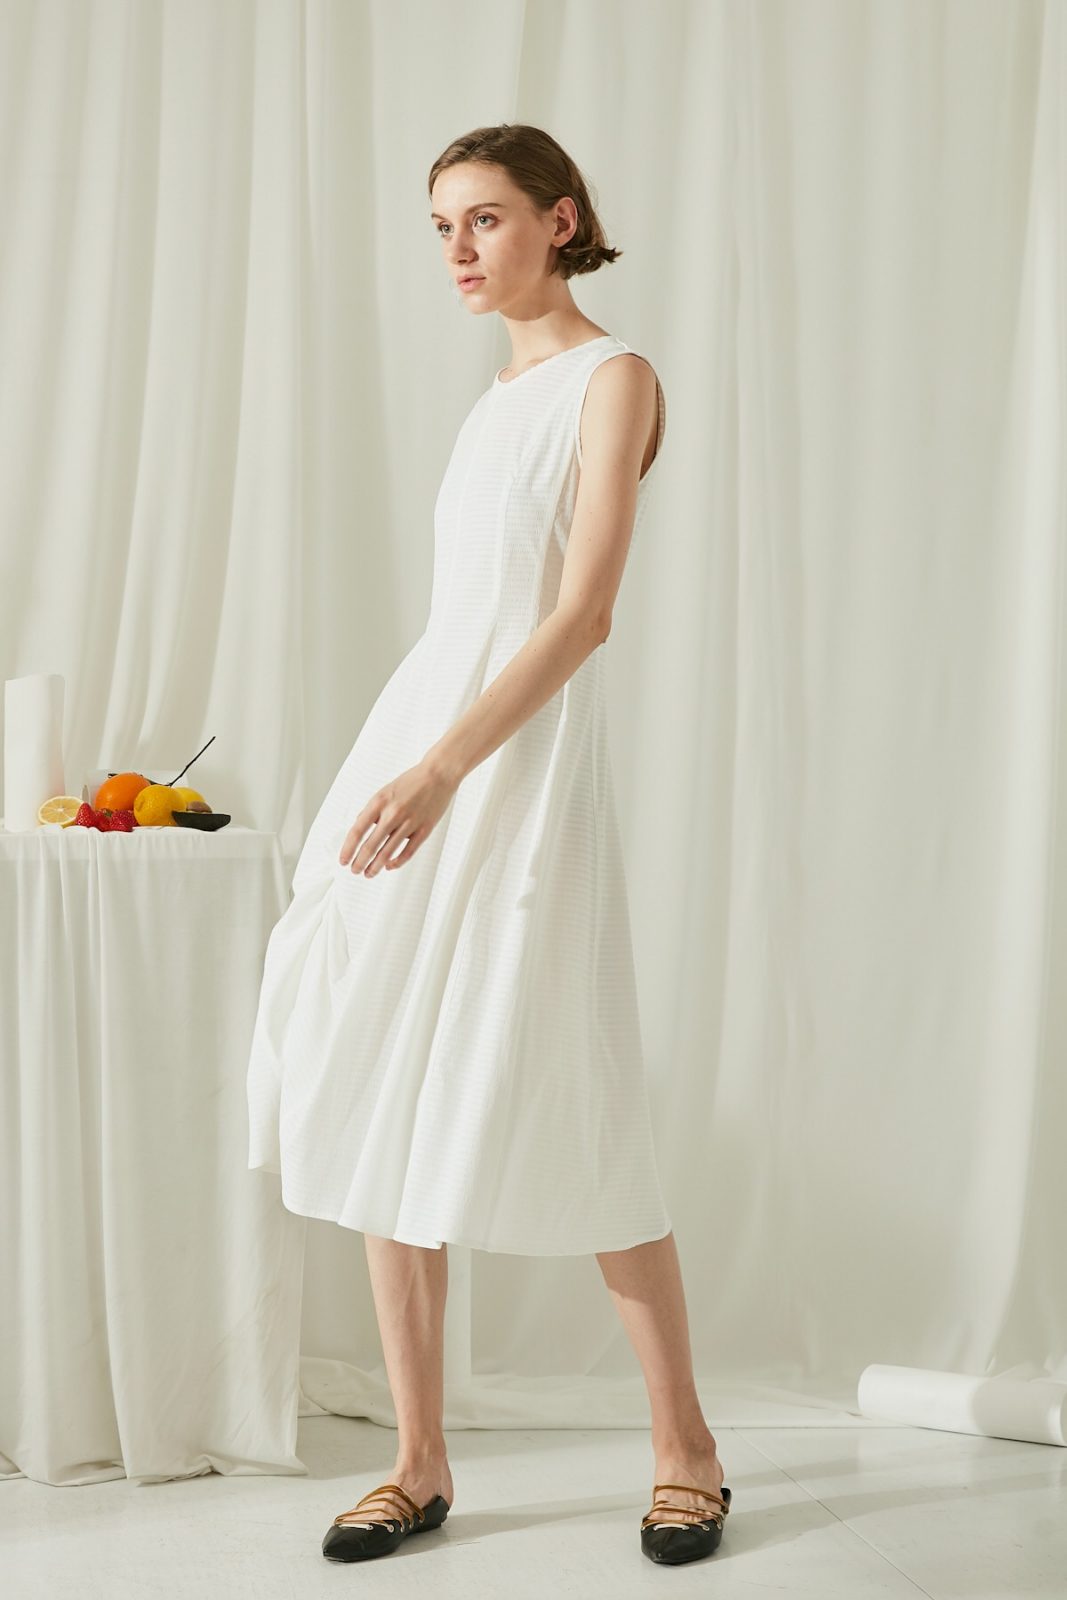 SKYE San Francisco SF ethical modern minimalist quality women clothing fashion Juliette Drawstring Dress white 4